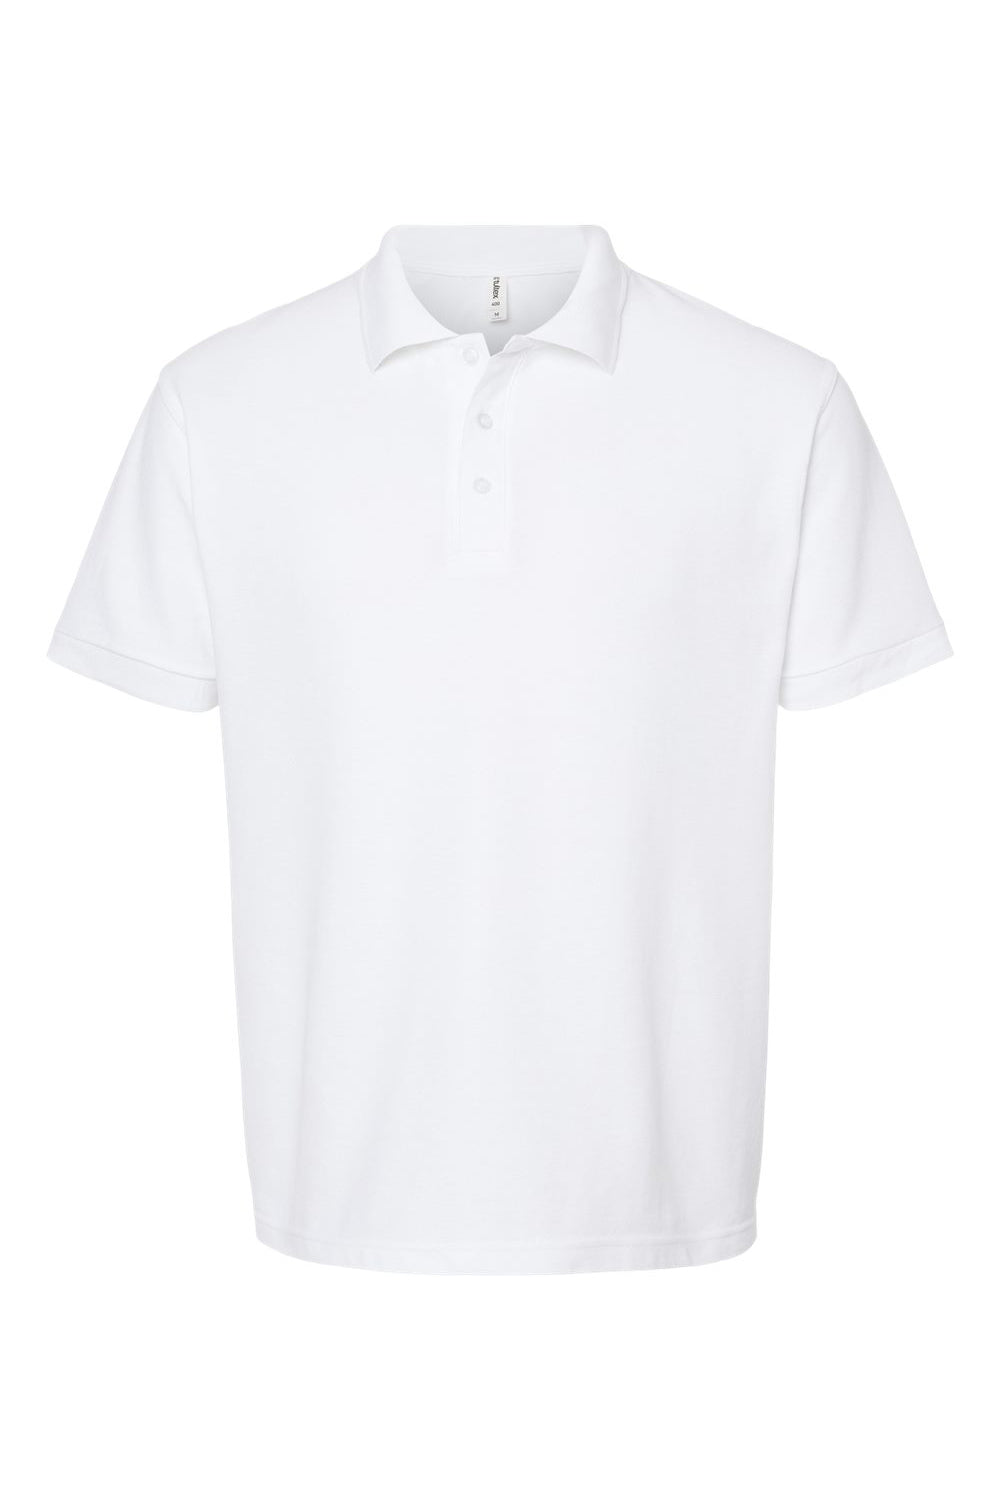 Tultex 400 Mens Sport Shirt Sleeve Polo Shirt White Flat Front